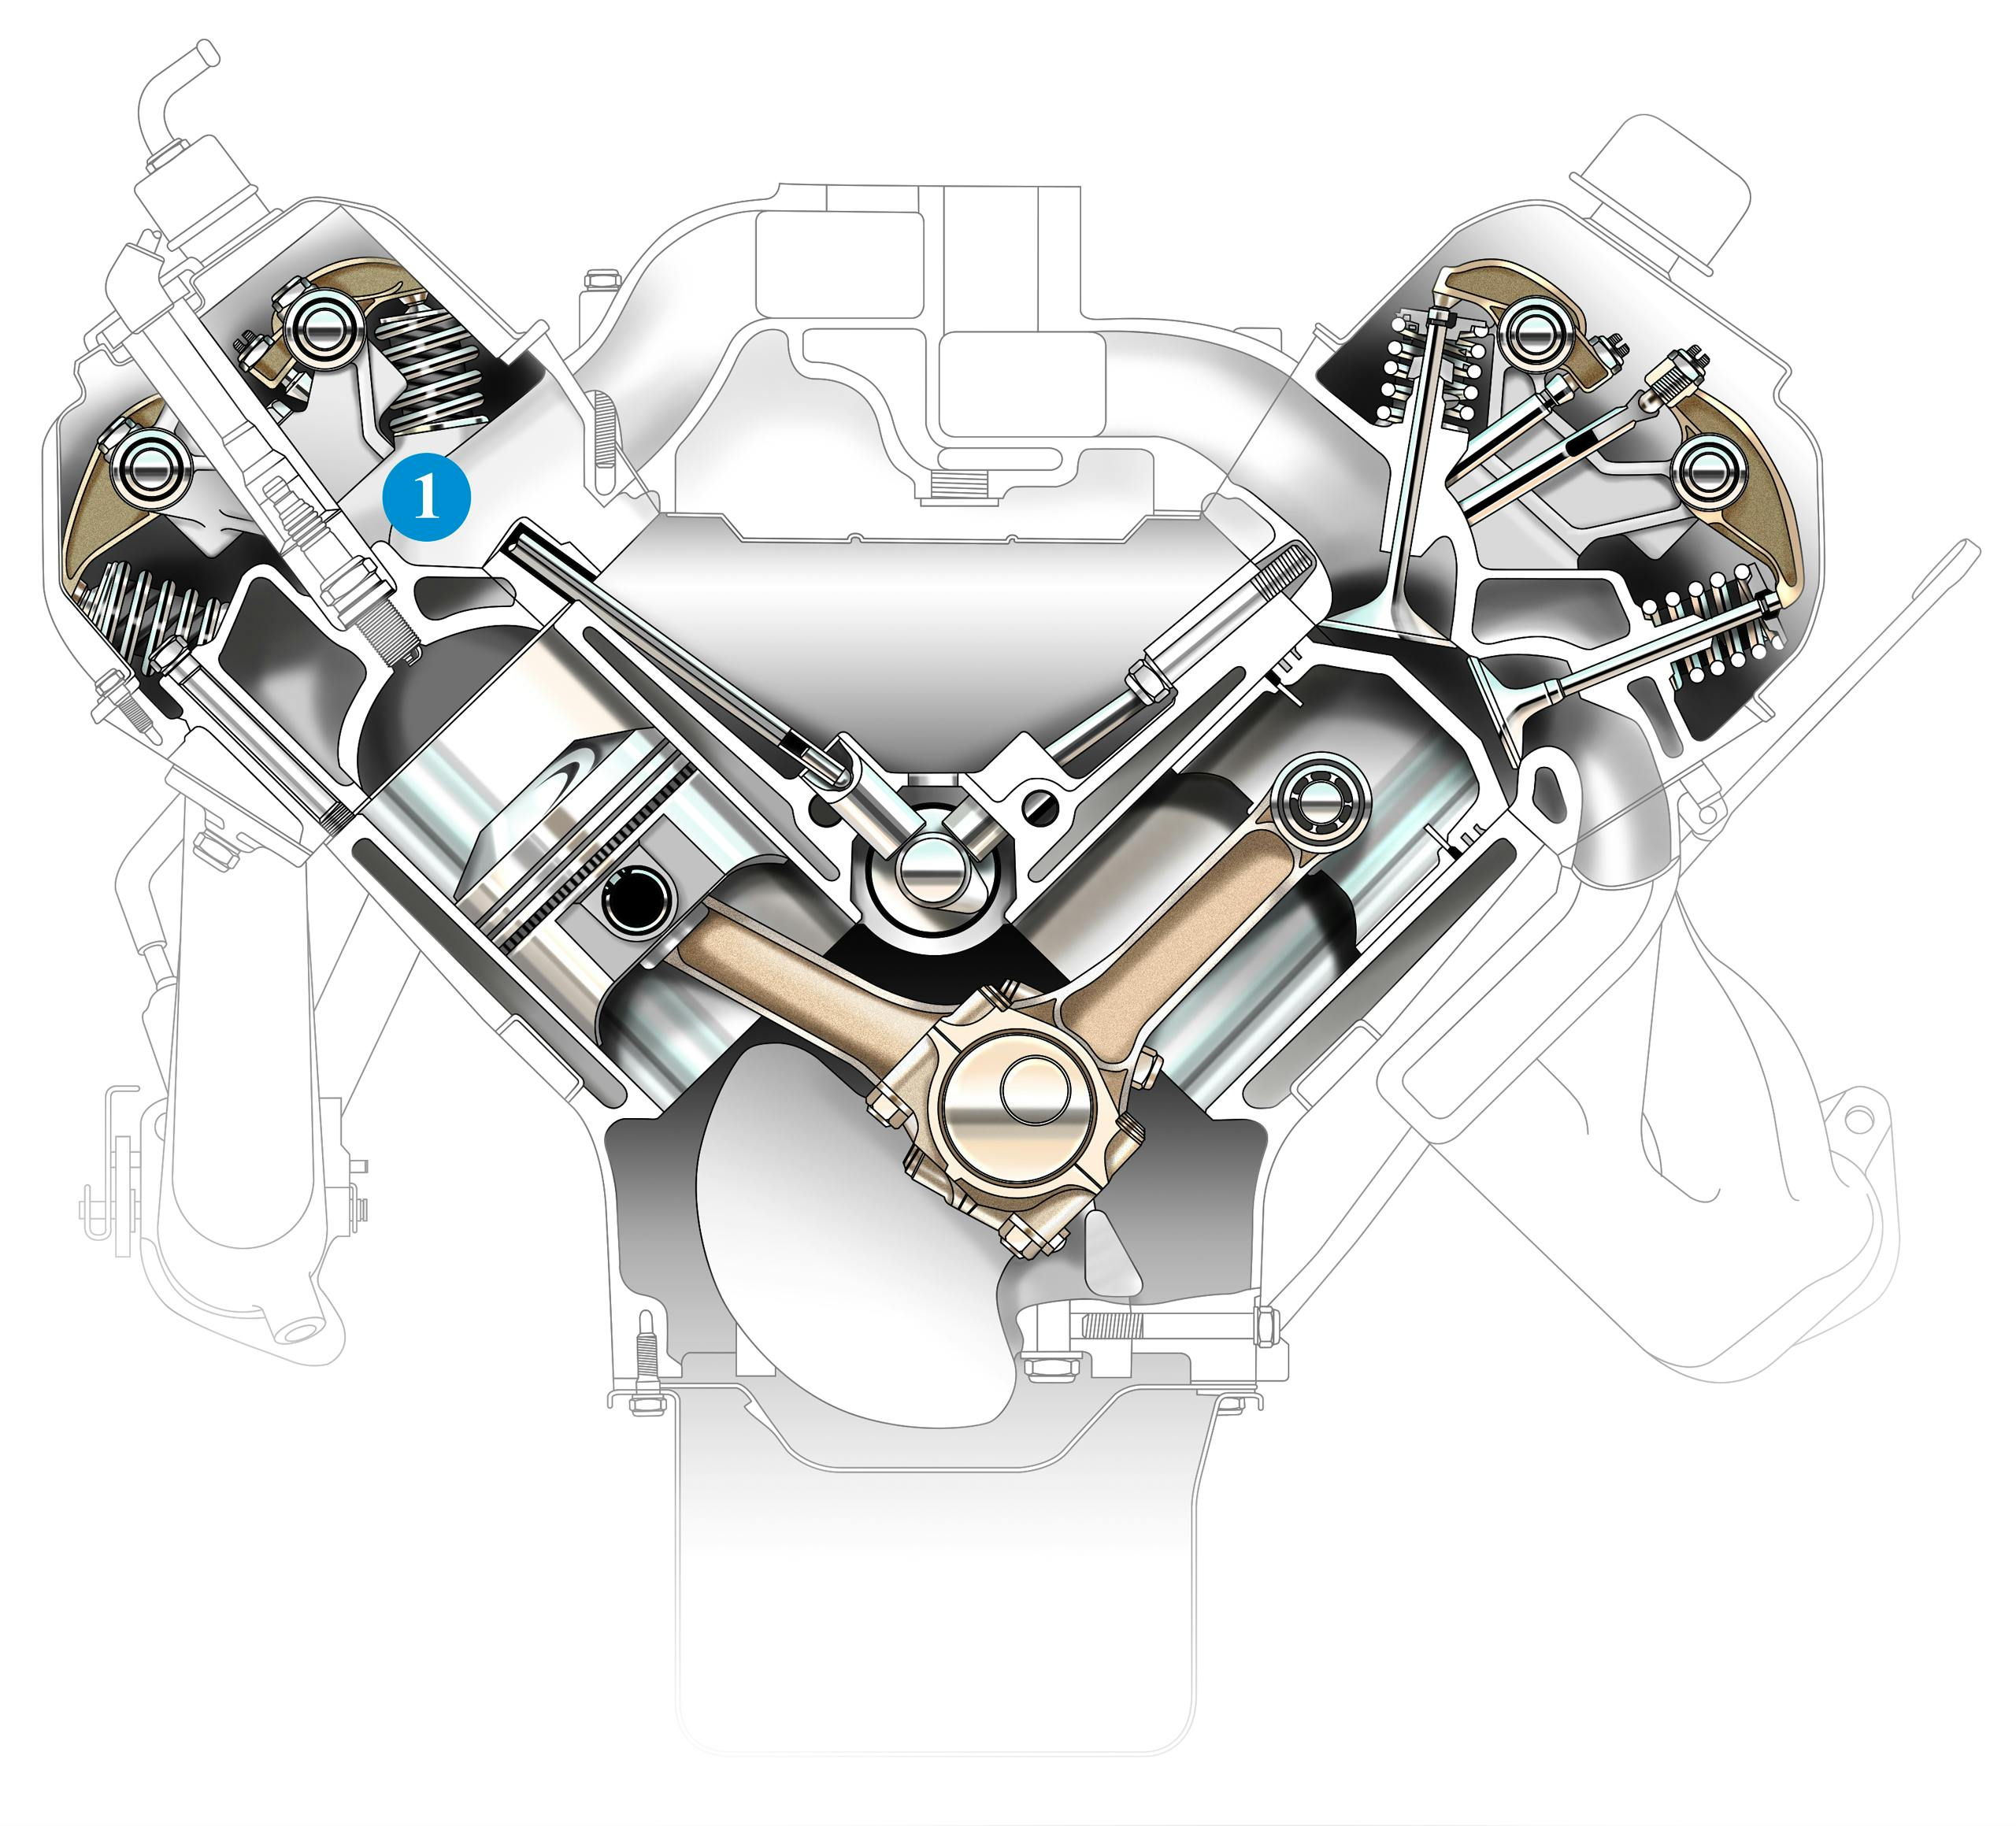 hemi engine cutaway